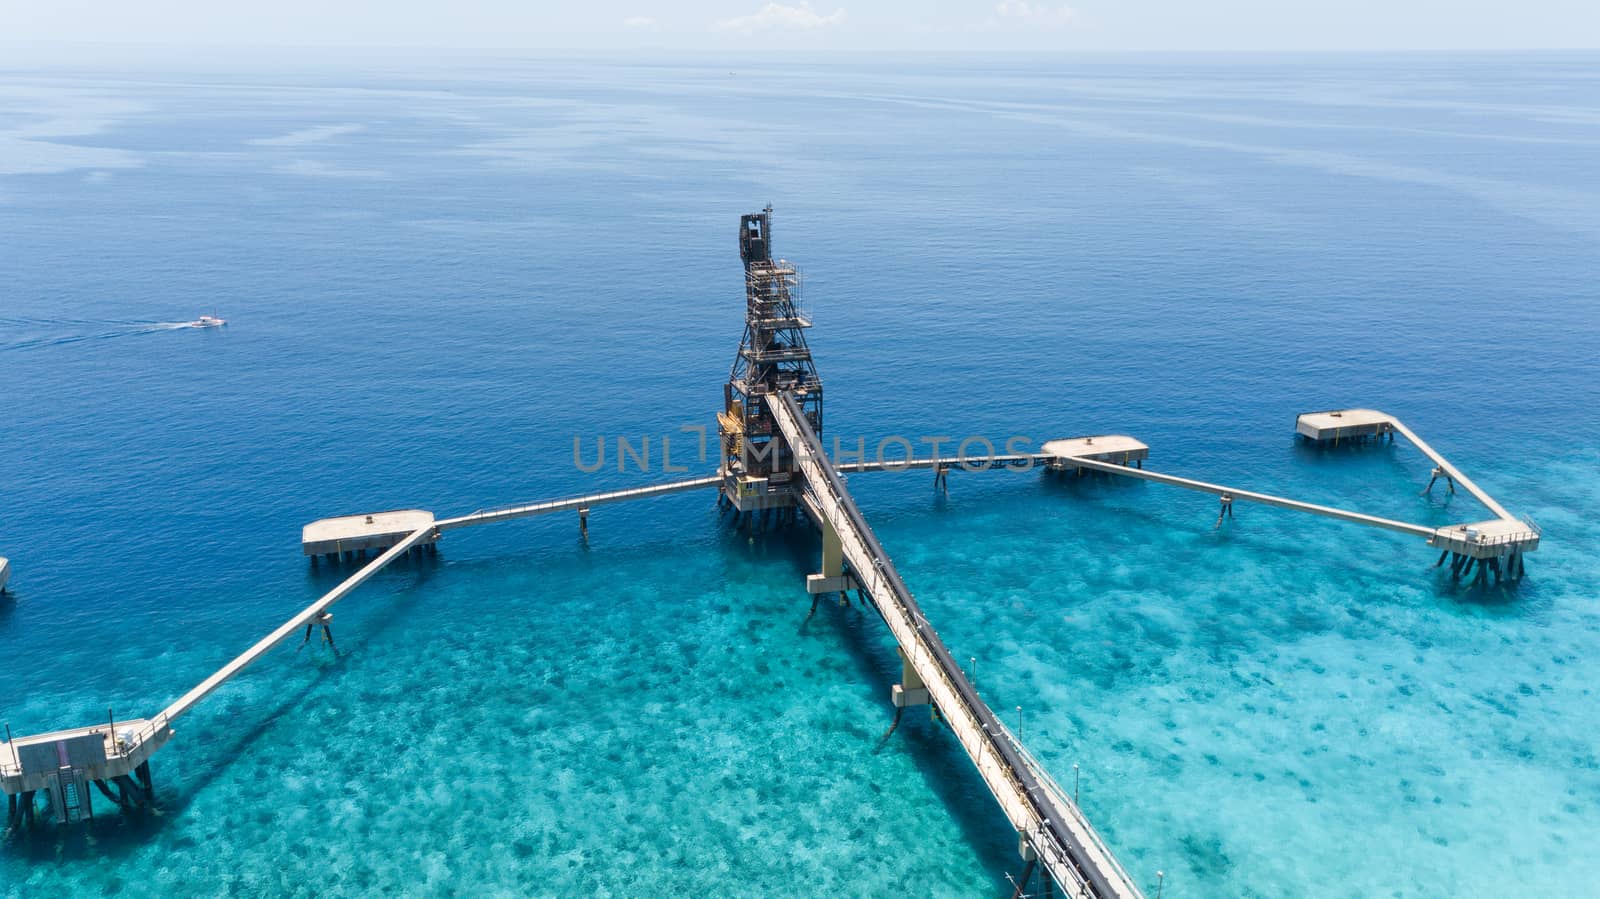 caribbean salt harbor Bonaire island aerial drone top view